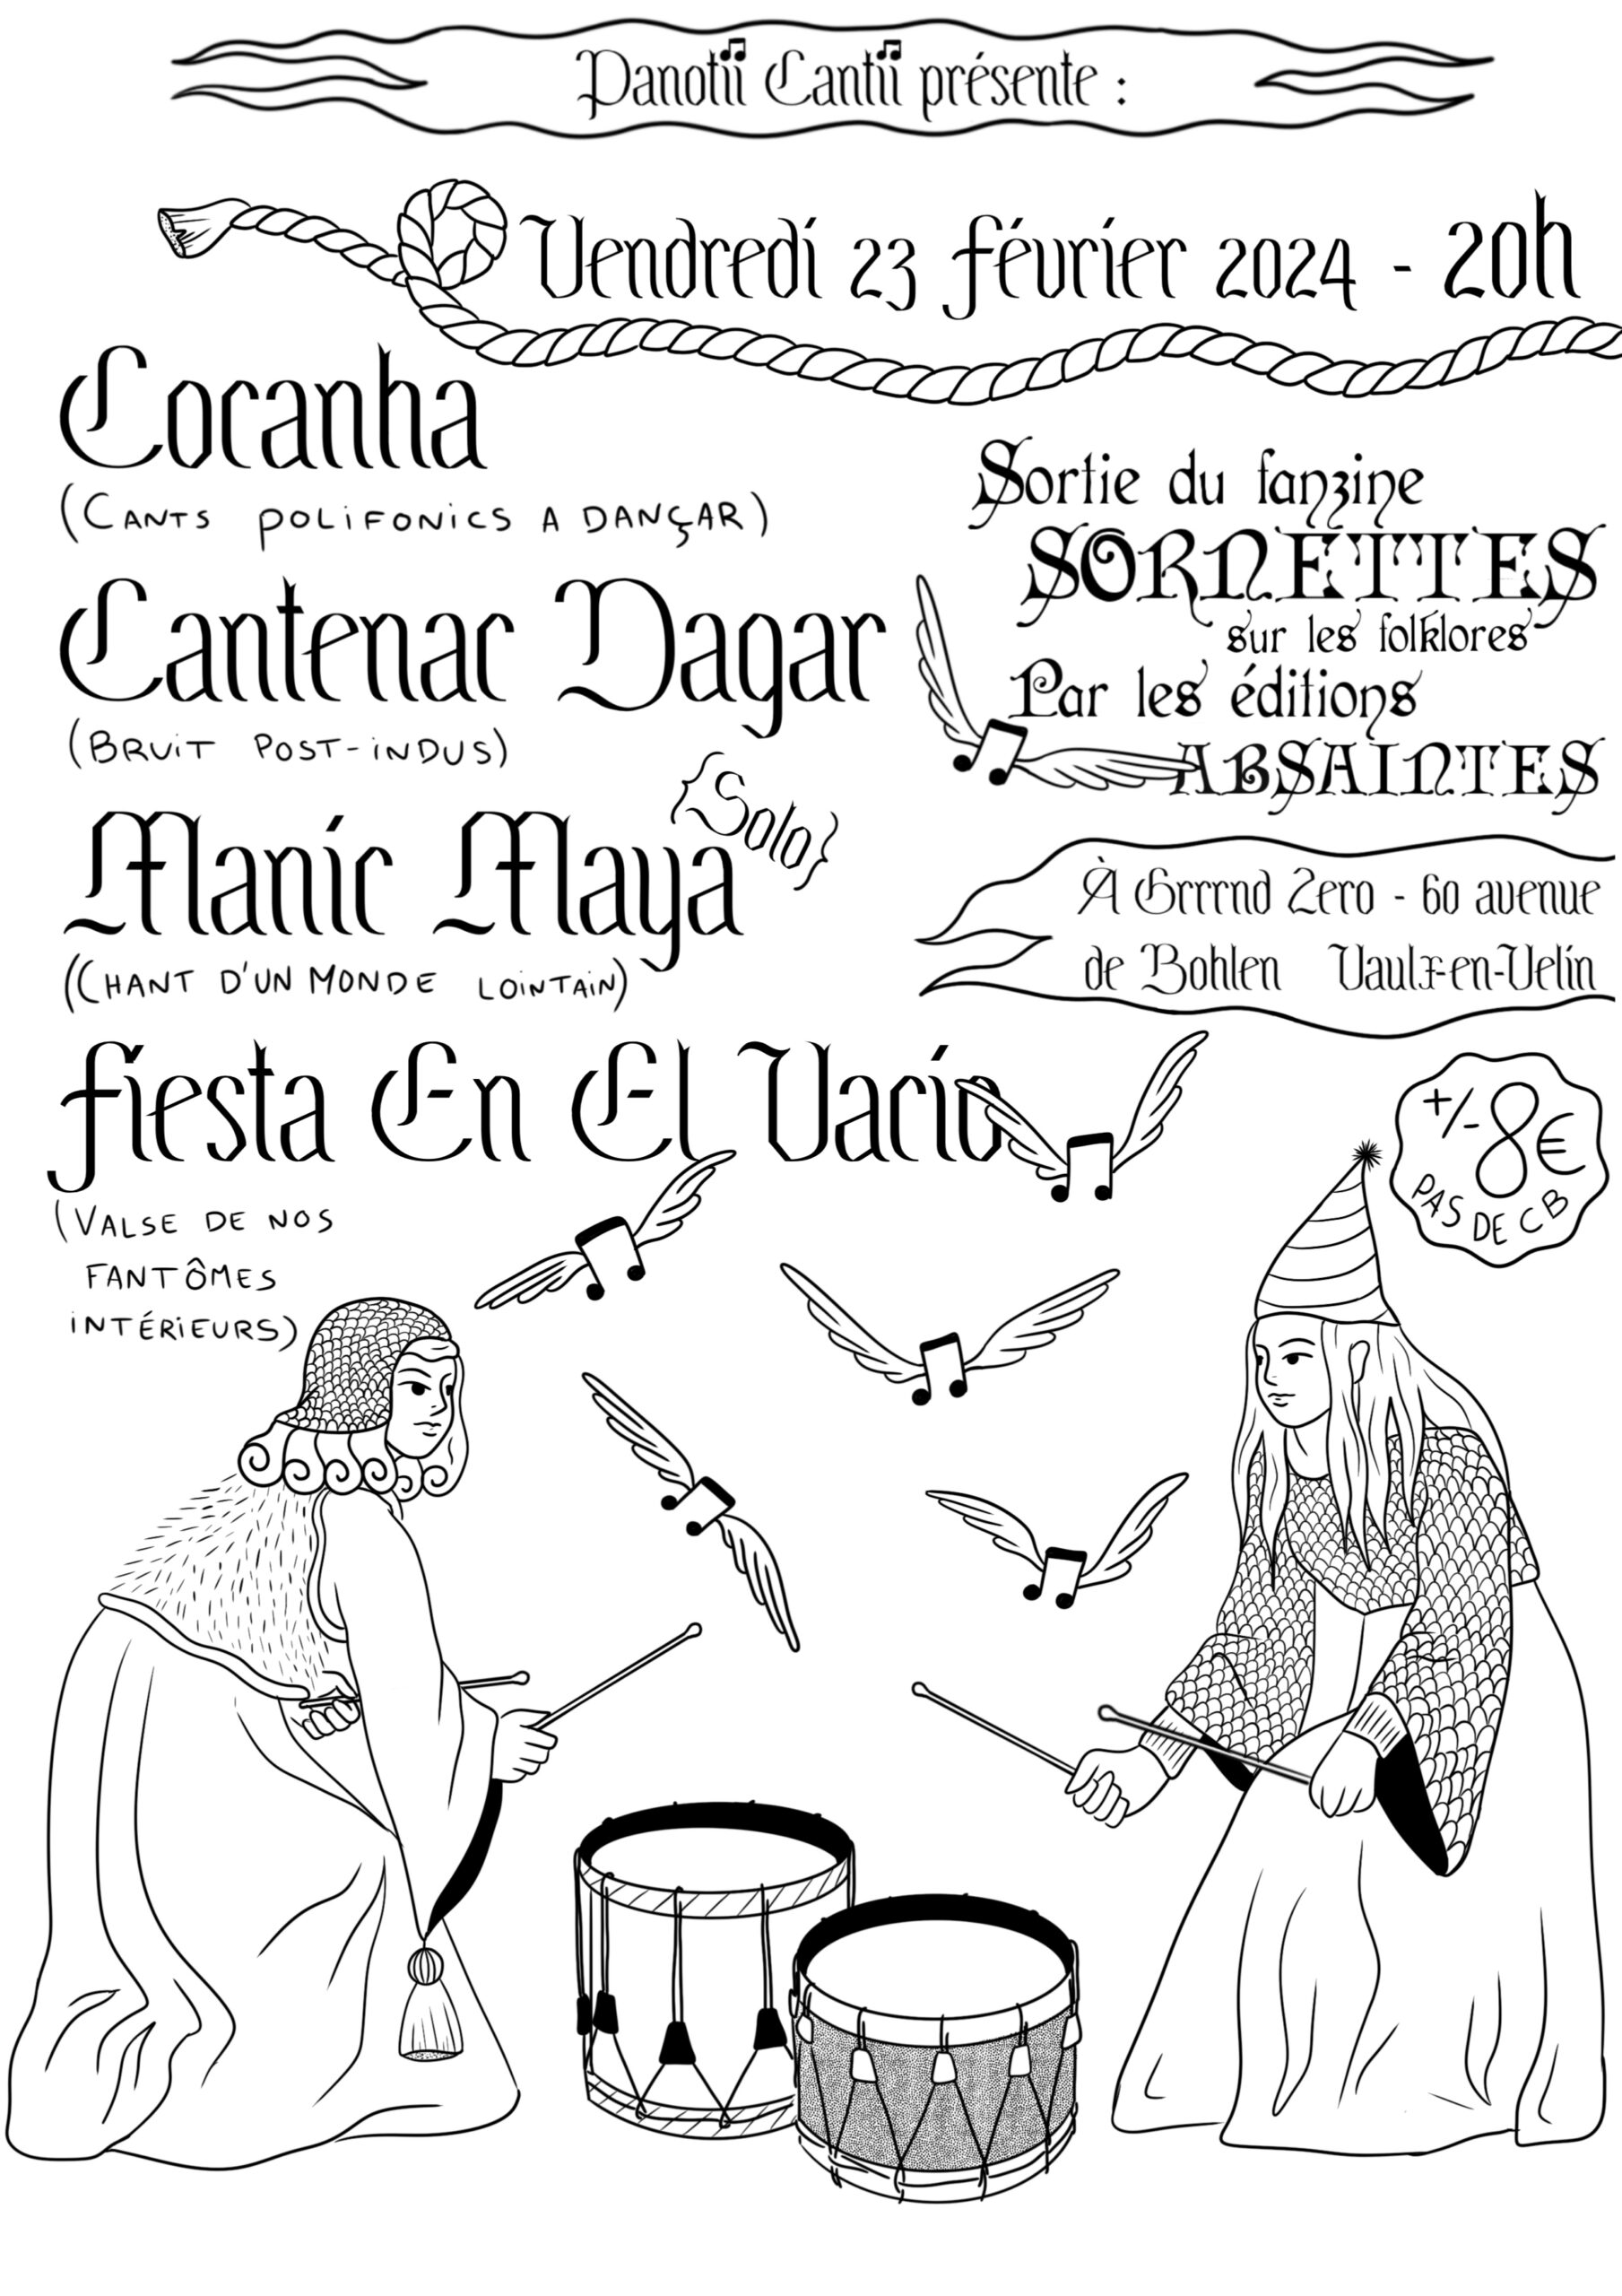 Affiche 23 Fevrier Cocahna + Fiesta en El Vacio + Cantenac Dagar + Manic Maya